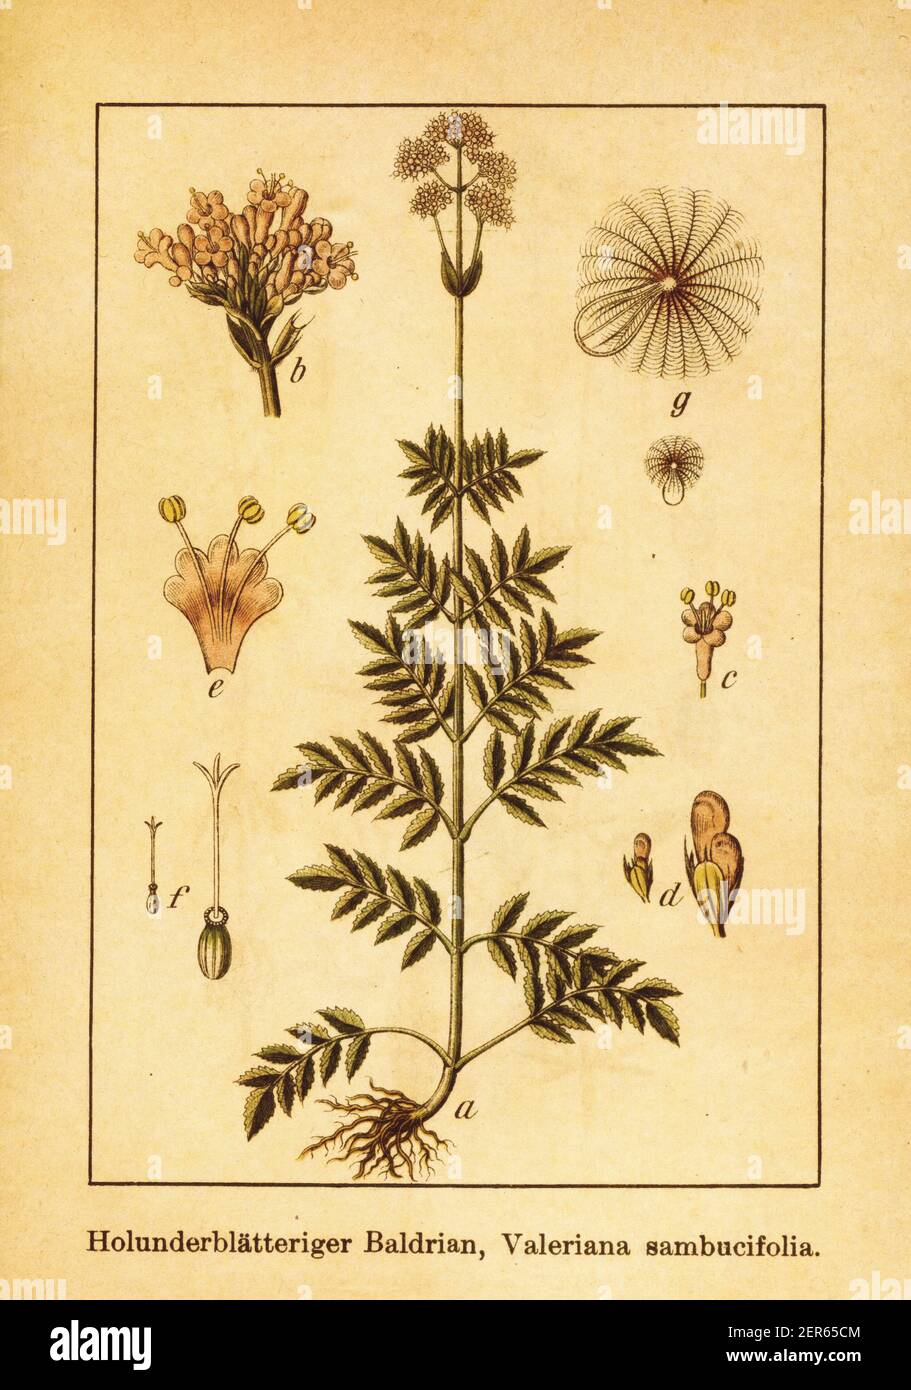 Antique 19th-century engraving of Valeriana sambucifolia. Illustration by Jacob Sturm (1771-1848) from the book Deutschlands Flora in Abbildungen nach Stock Photo